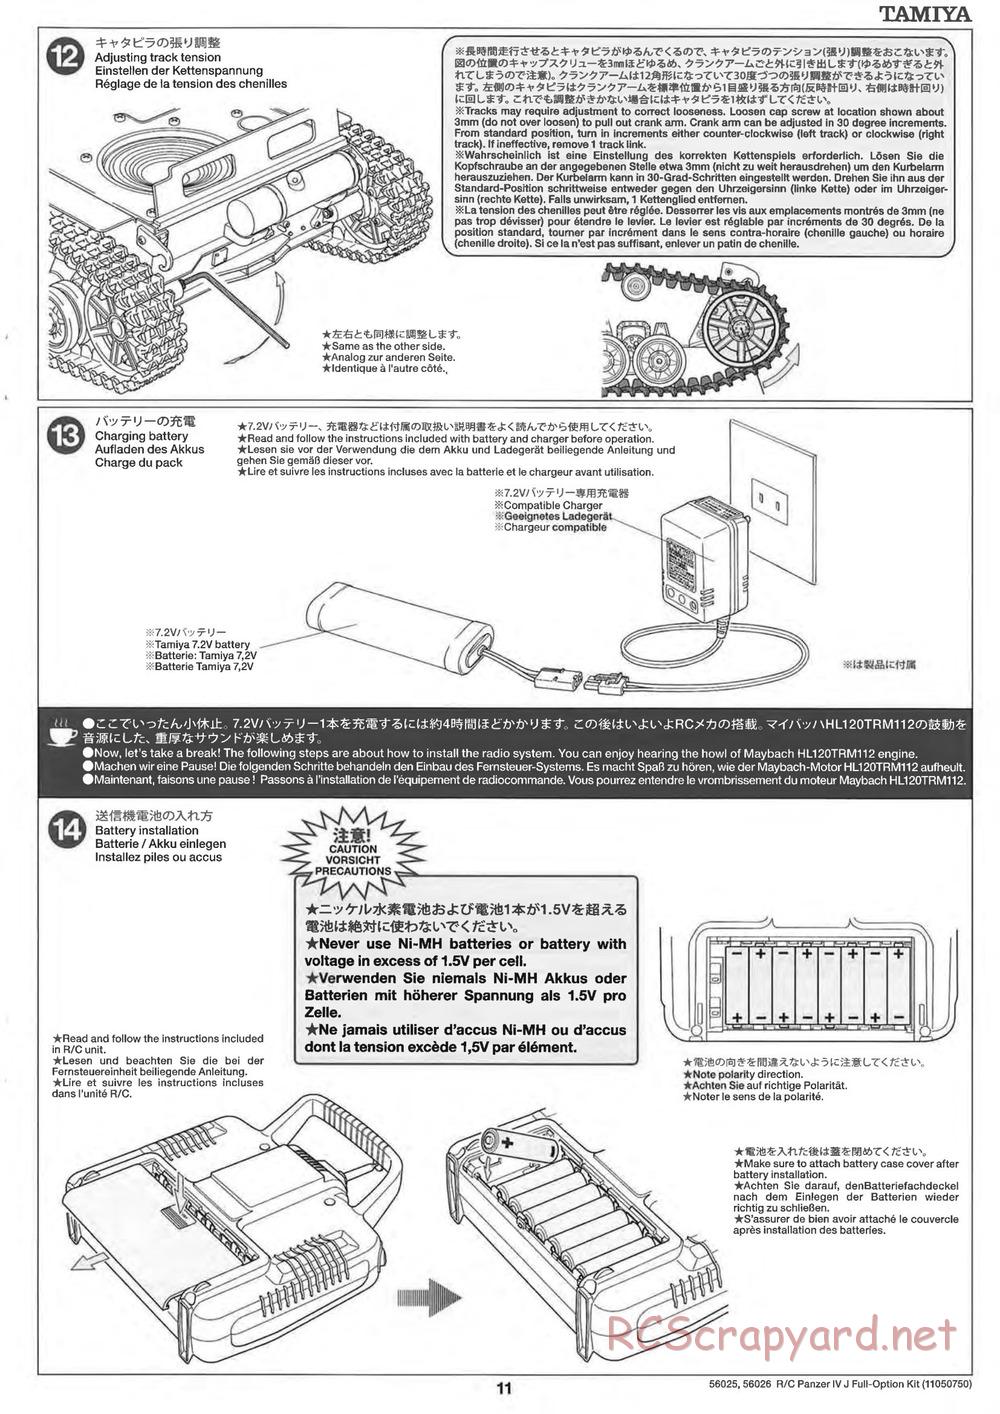 Tamiya - Panzerkampfwagen IV Ausf.J - 1/16 Scale Chassis - Manual - Page 11